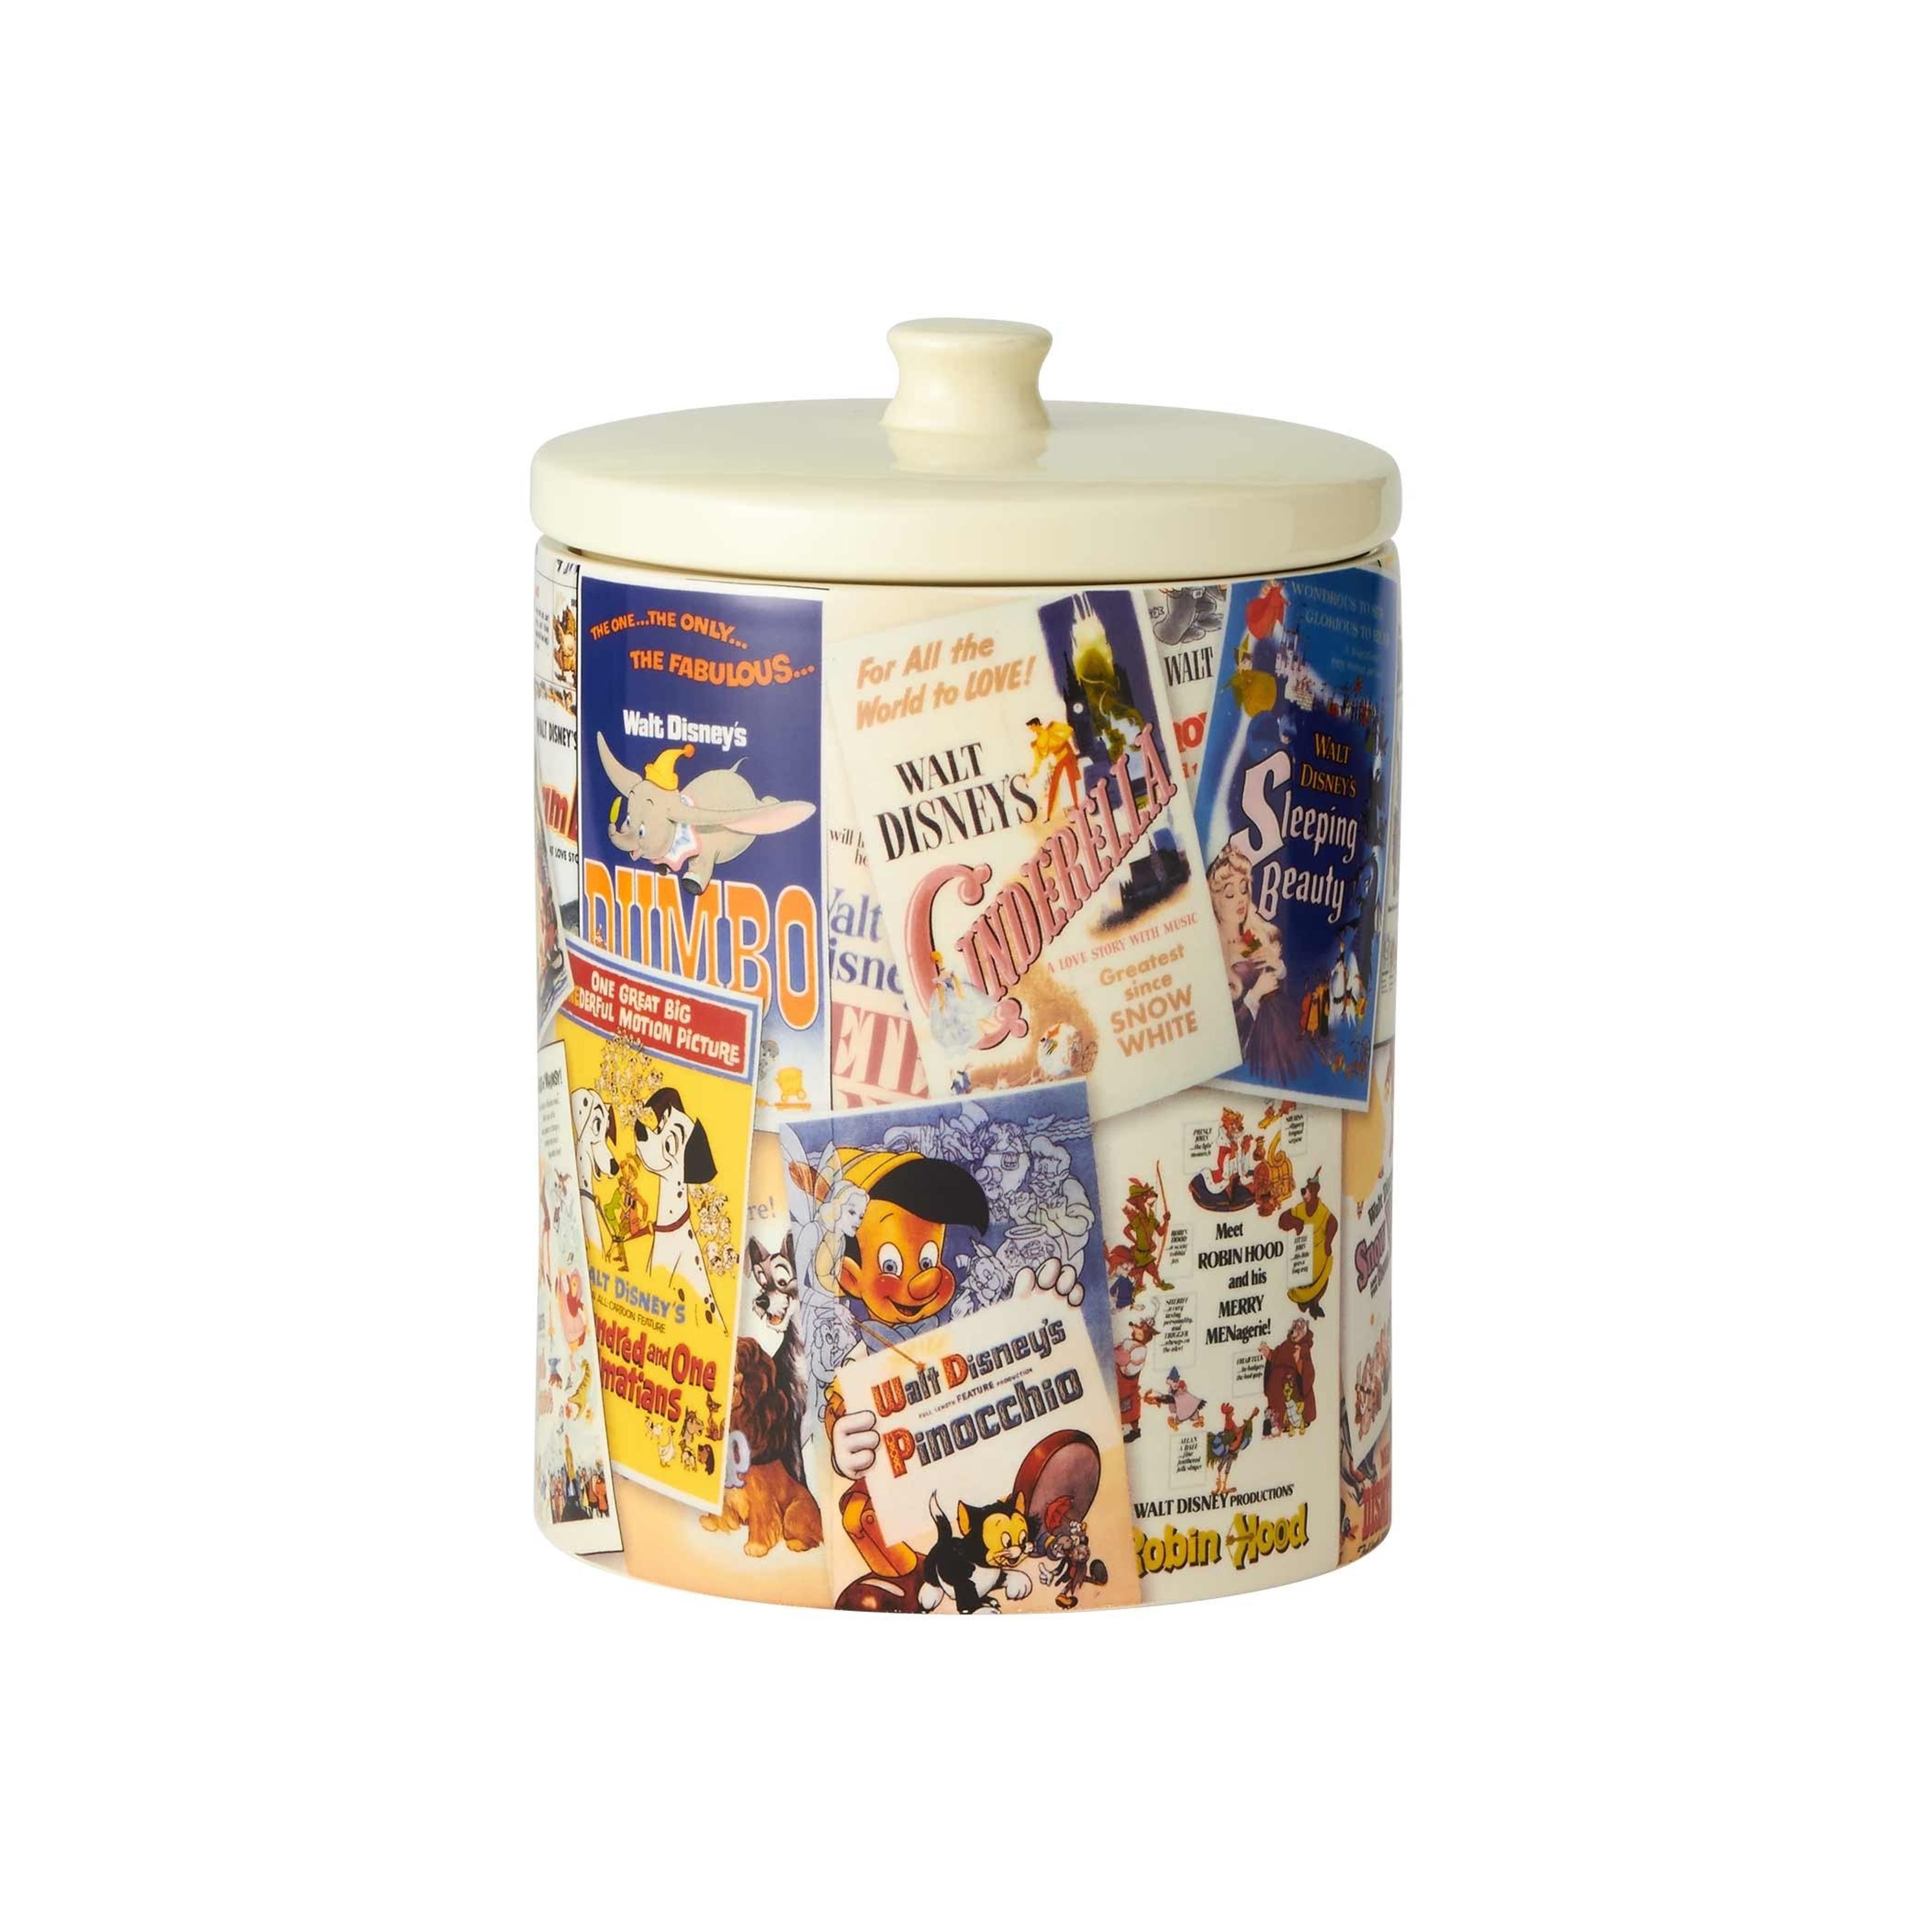 Enesco Ceramics Classic Disney Film Posters Cookie Jar Canister, 9.25 Inch, Multicolor